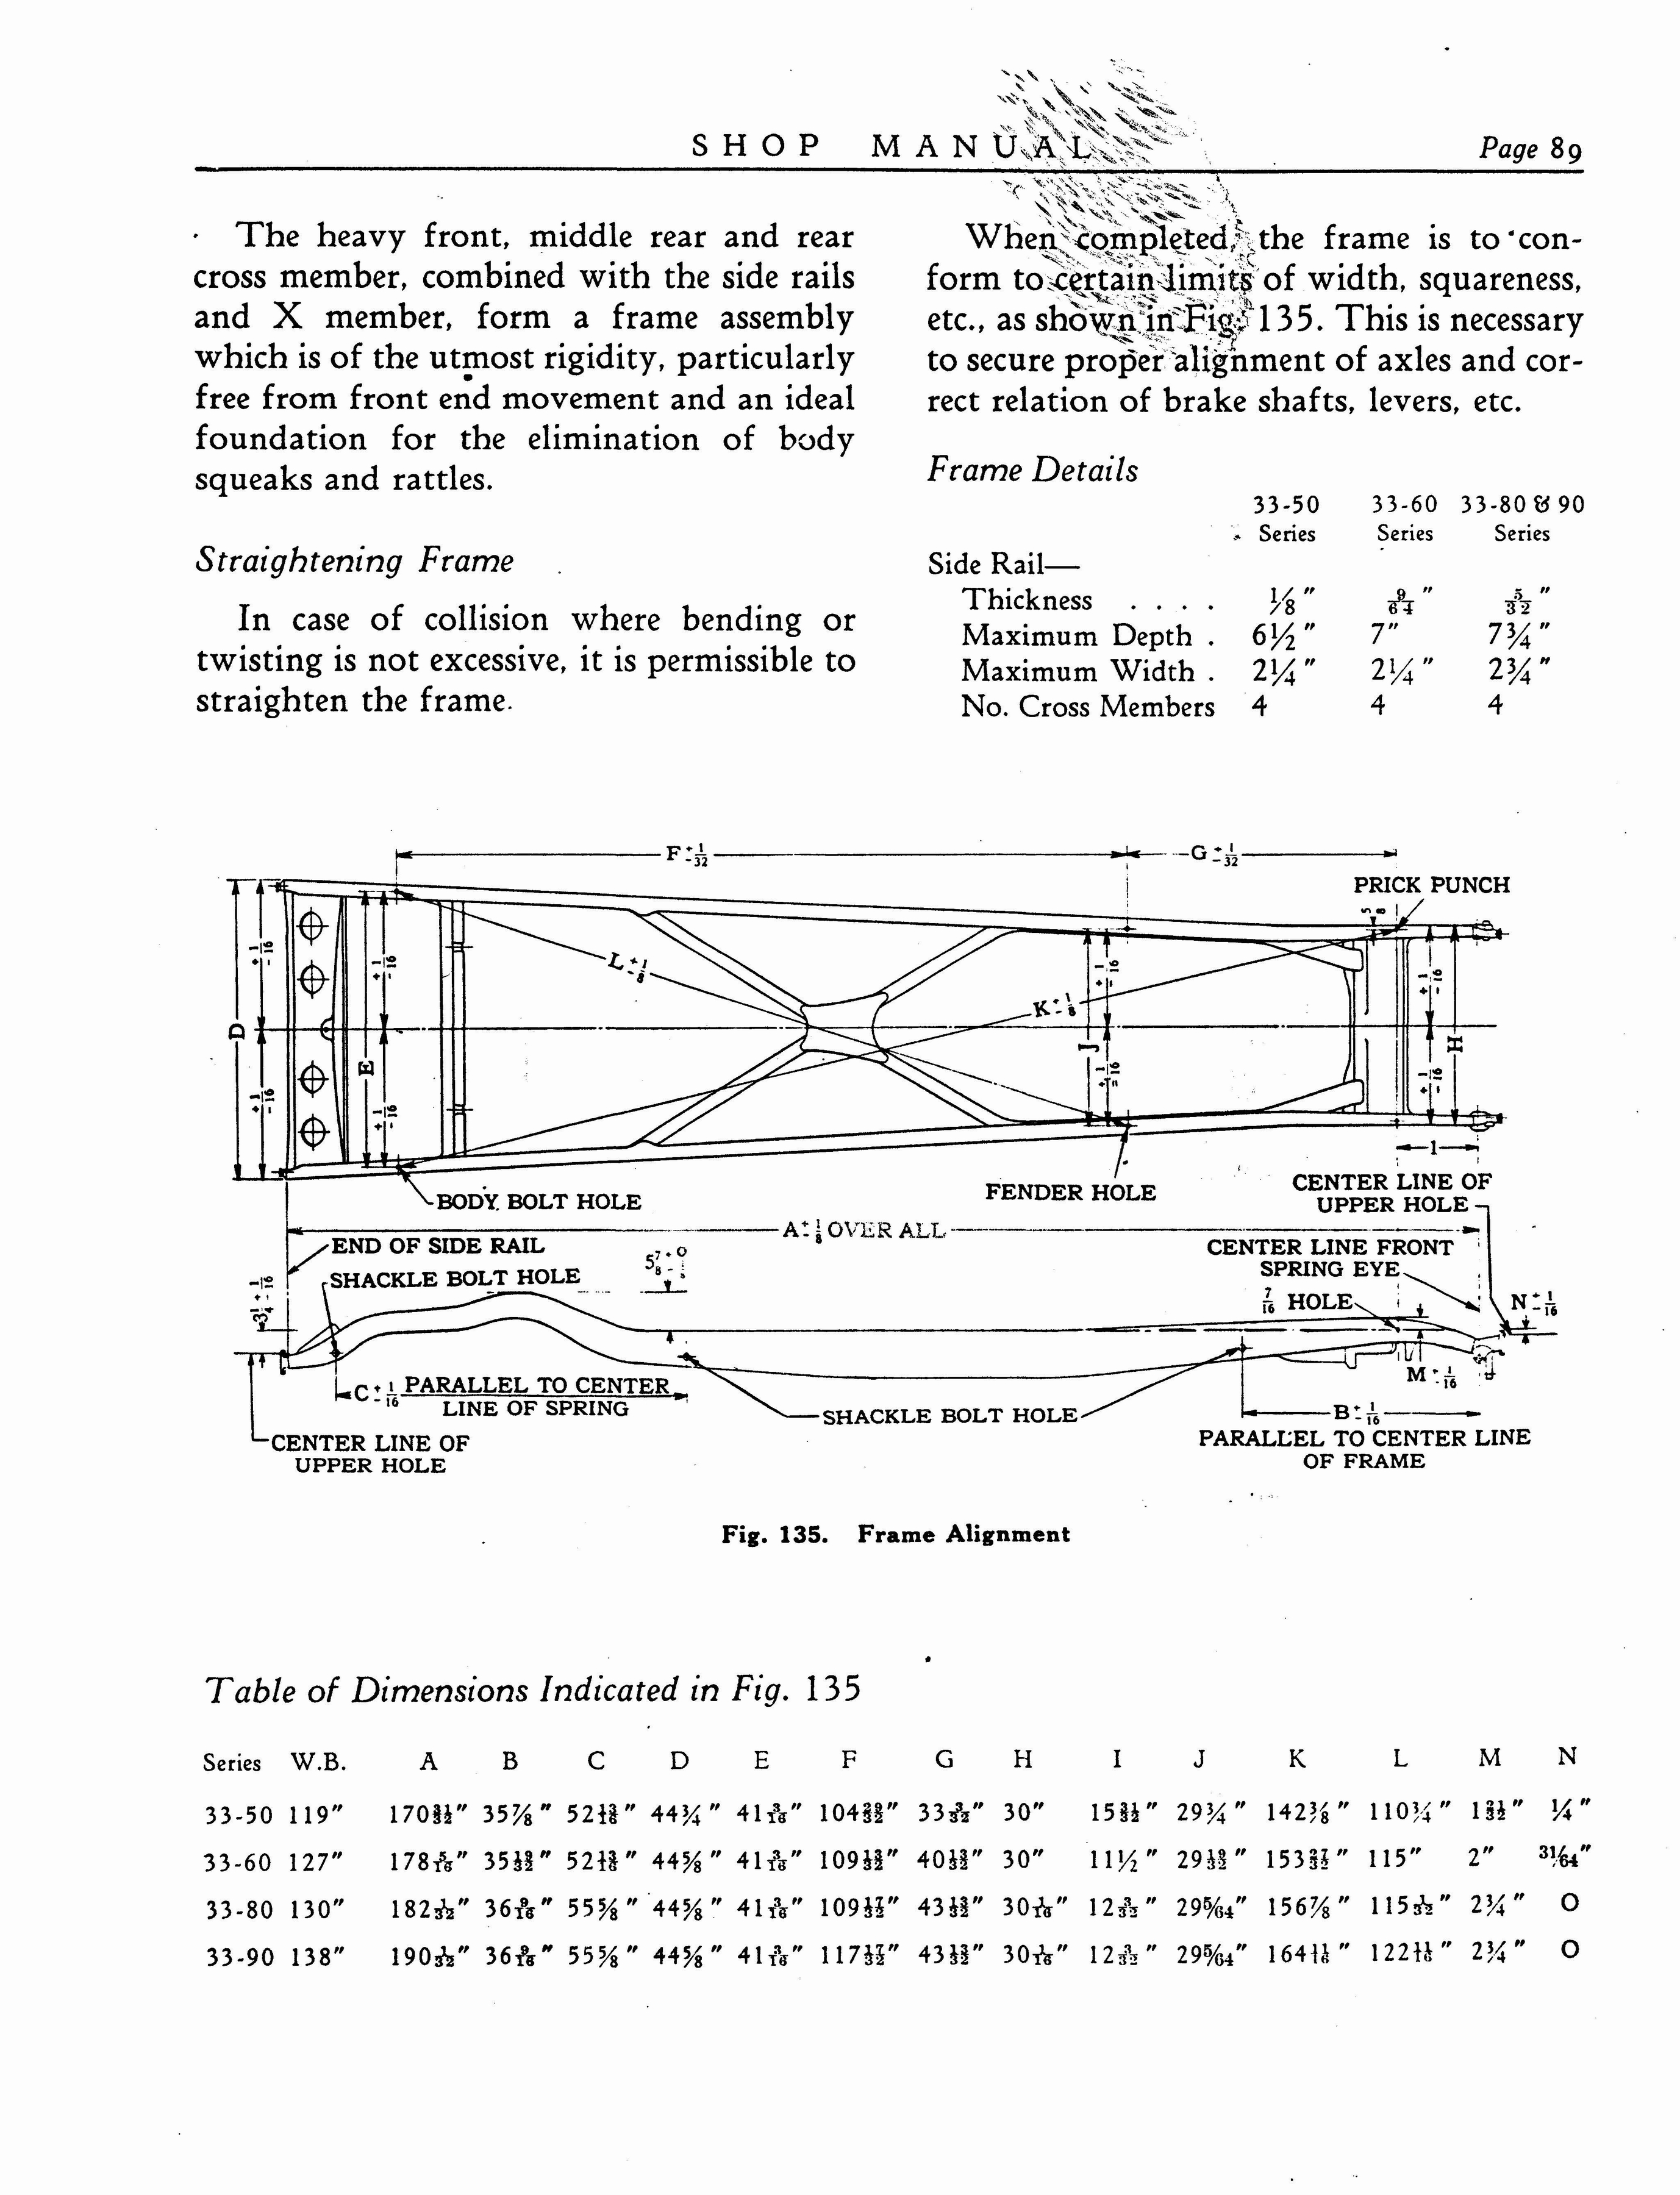 n_1933 Buick Shop Manual_Page_090.jpg